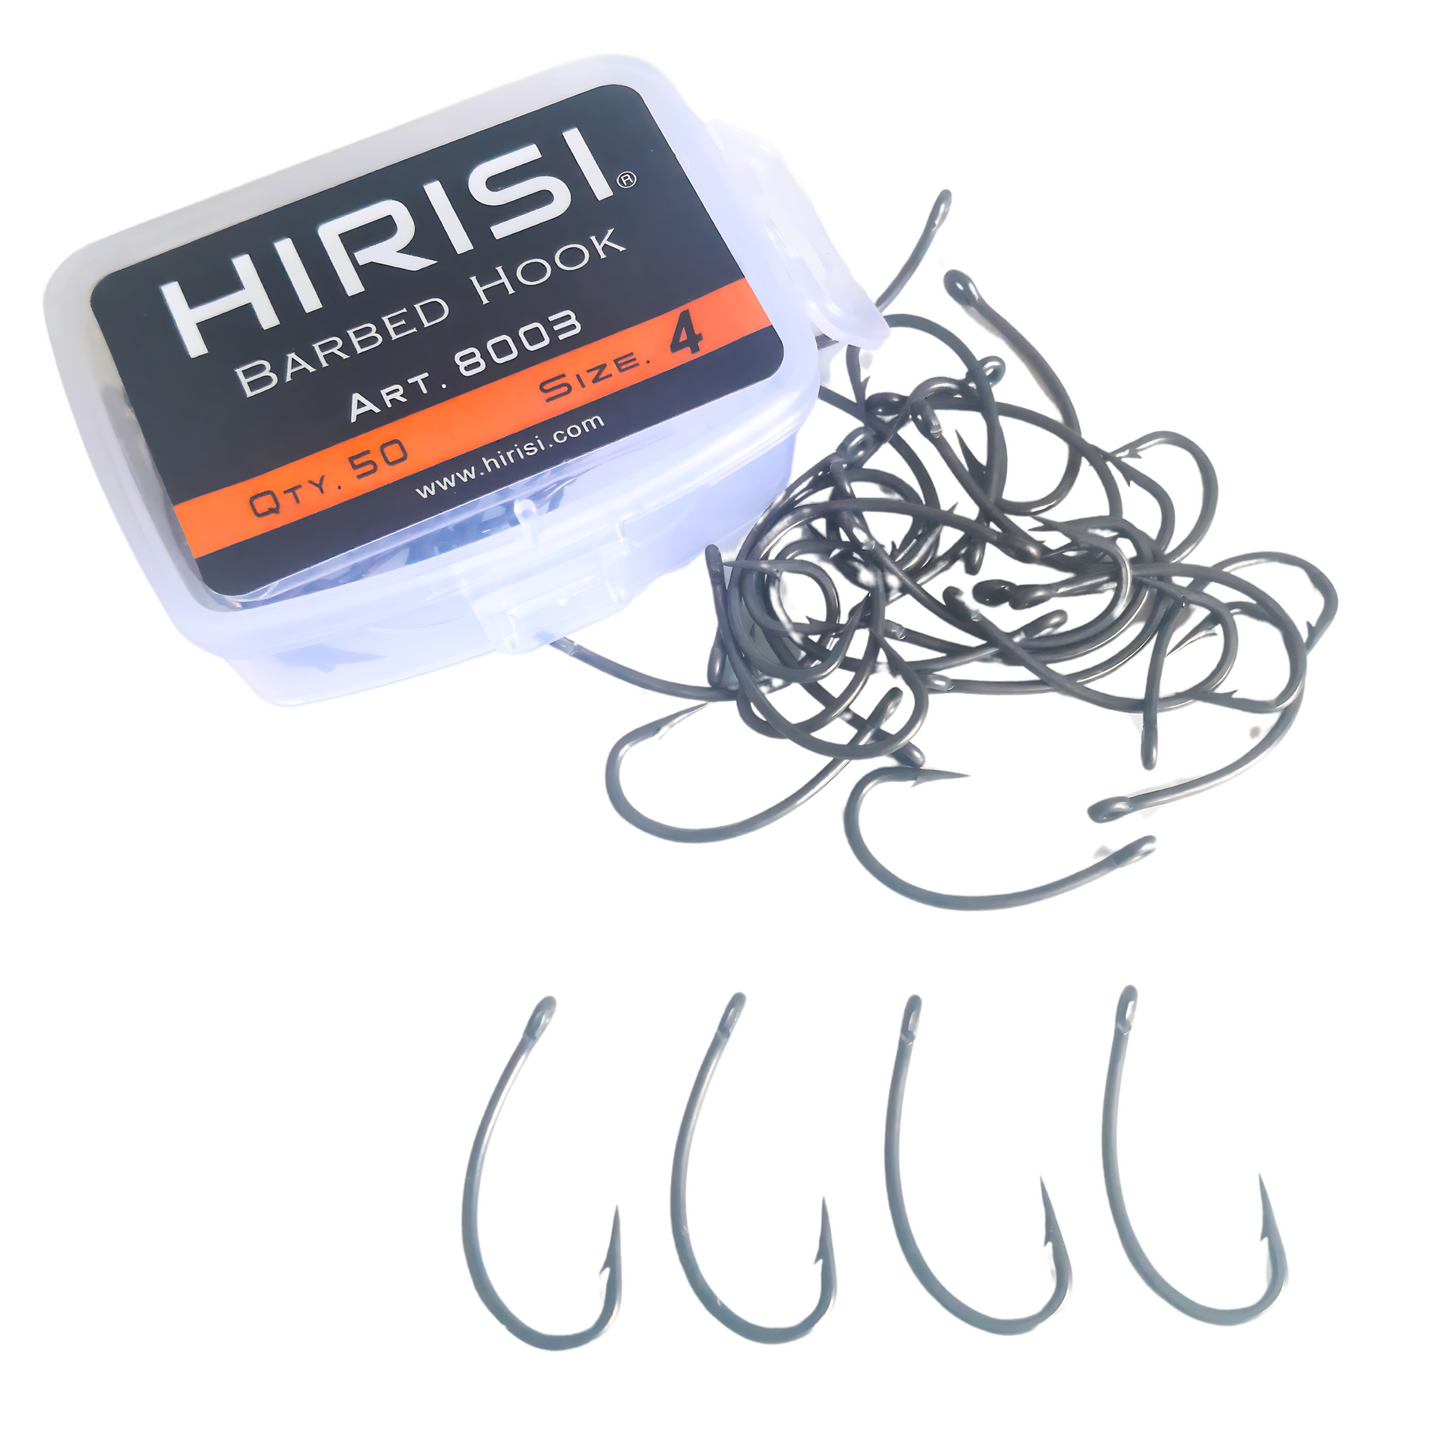 Hirisi Carbon Steel Hooks 8003 | 50 Pieces | No. 4